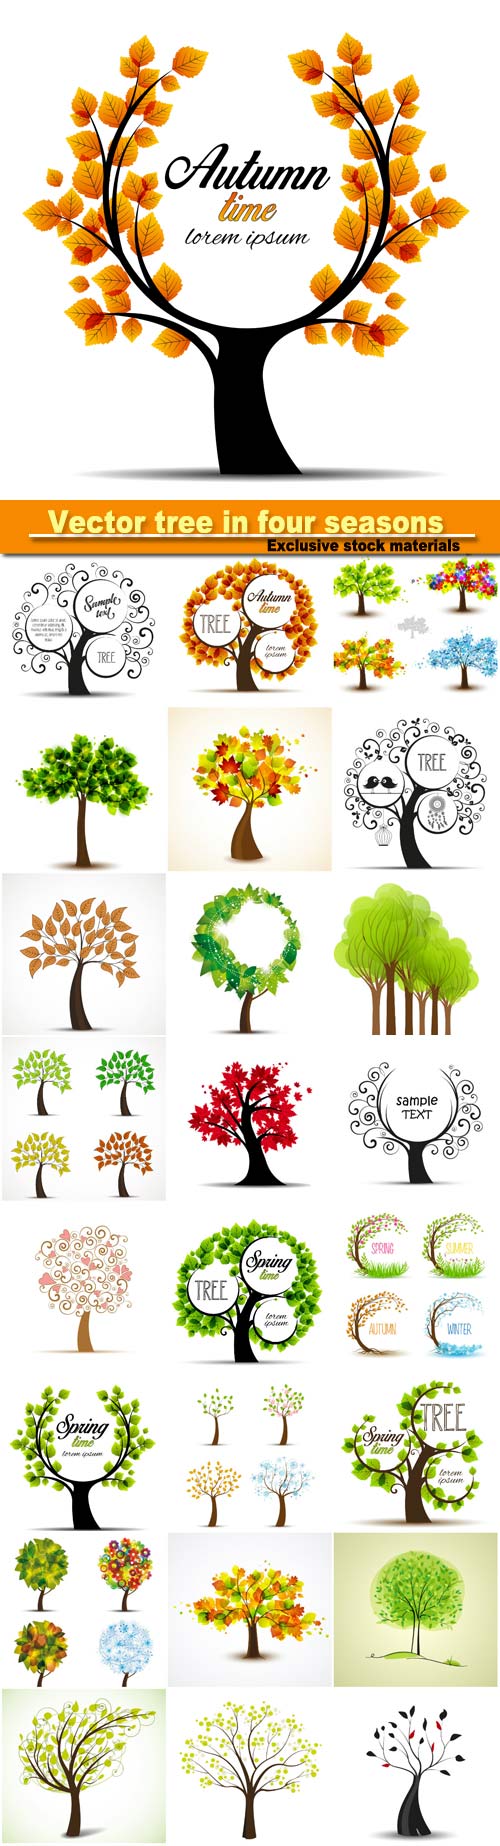 Vector tree in four seasons - spring, summer, autumn, winter